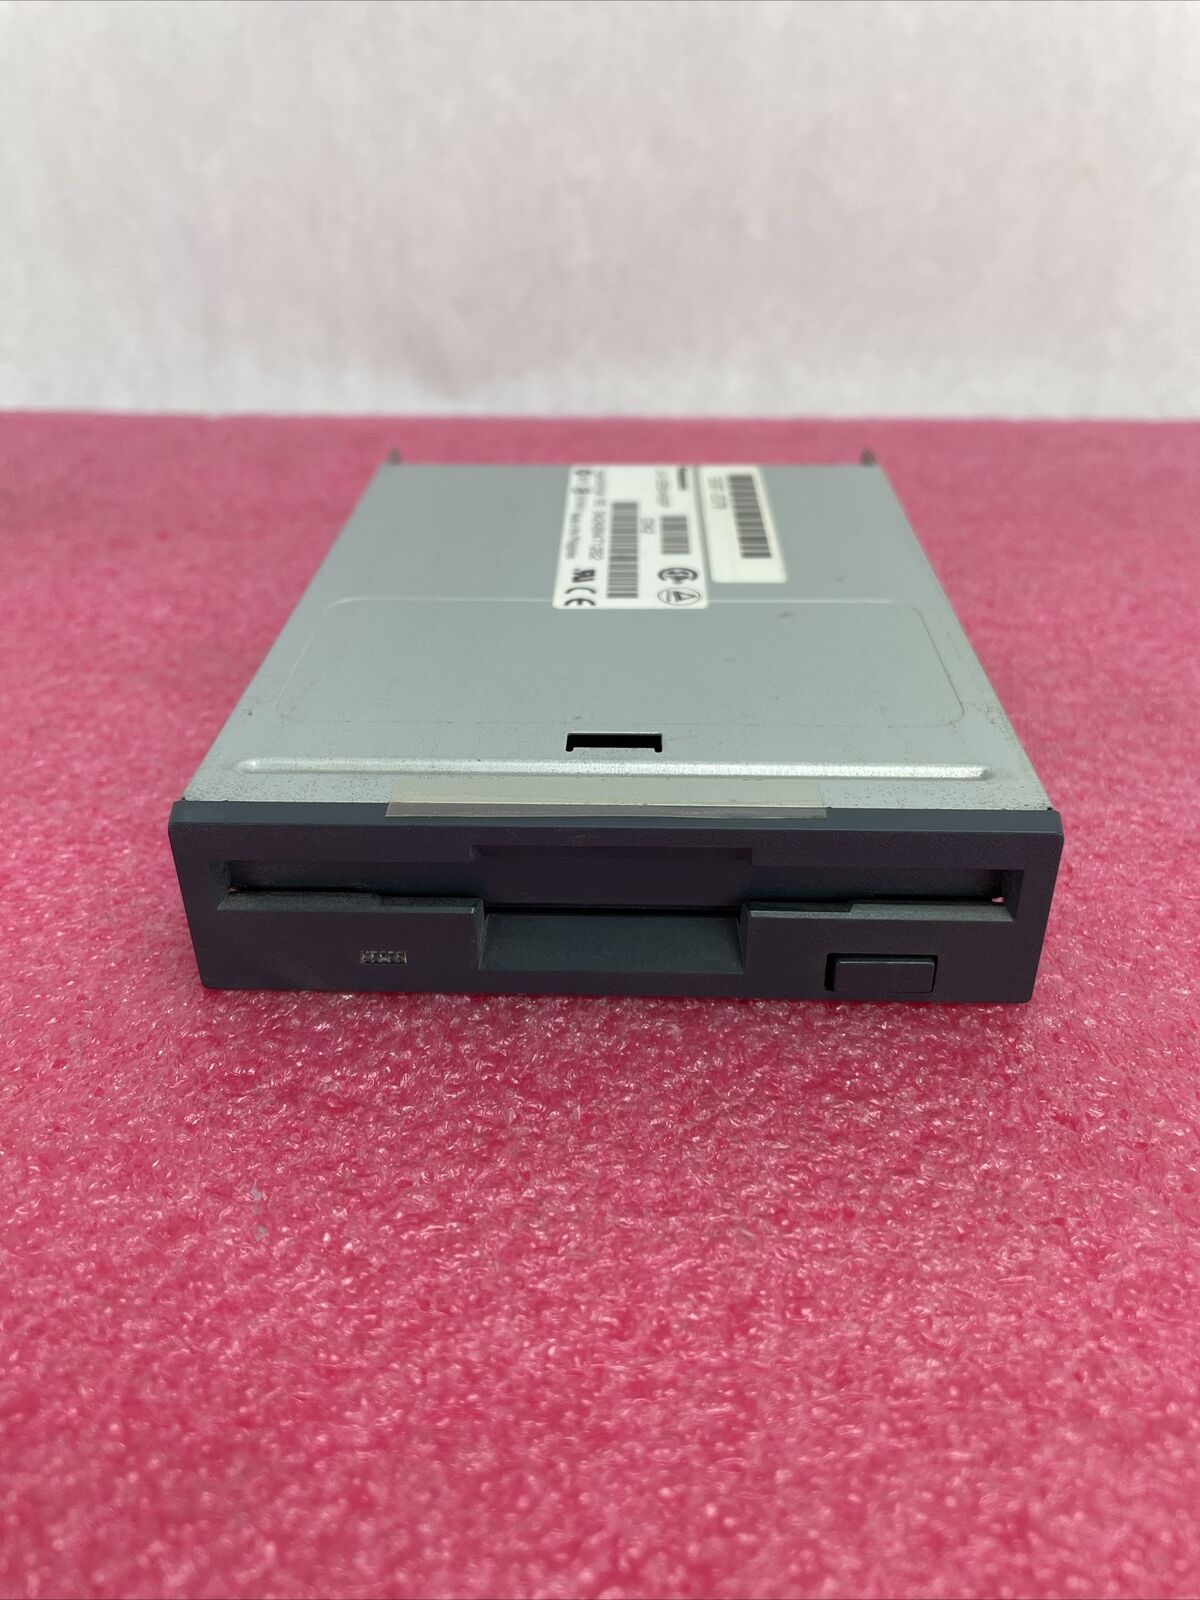 Panasonic JU-256A216P 3.5" 1.44MB Internal Floppy Disk Drive